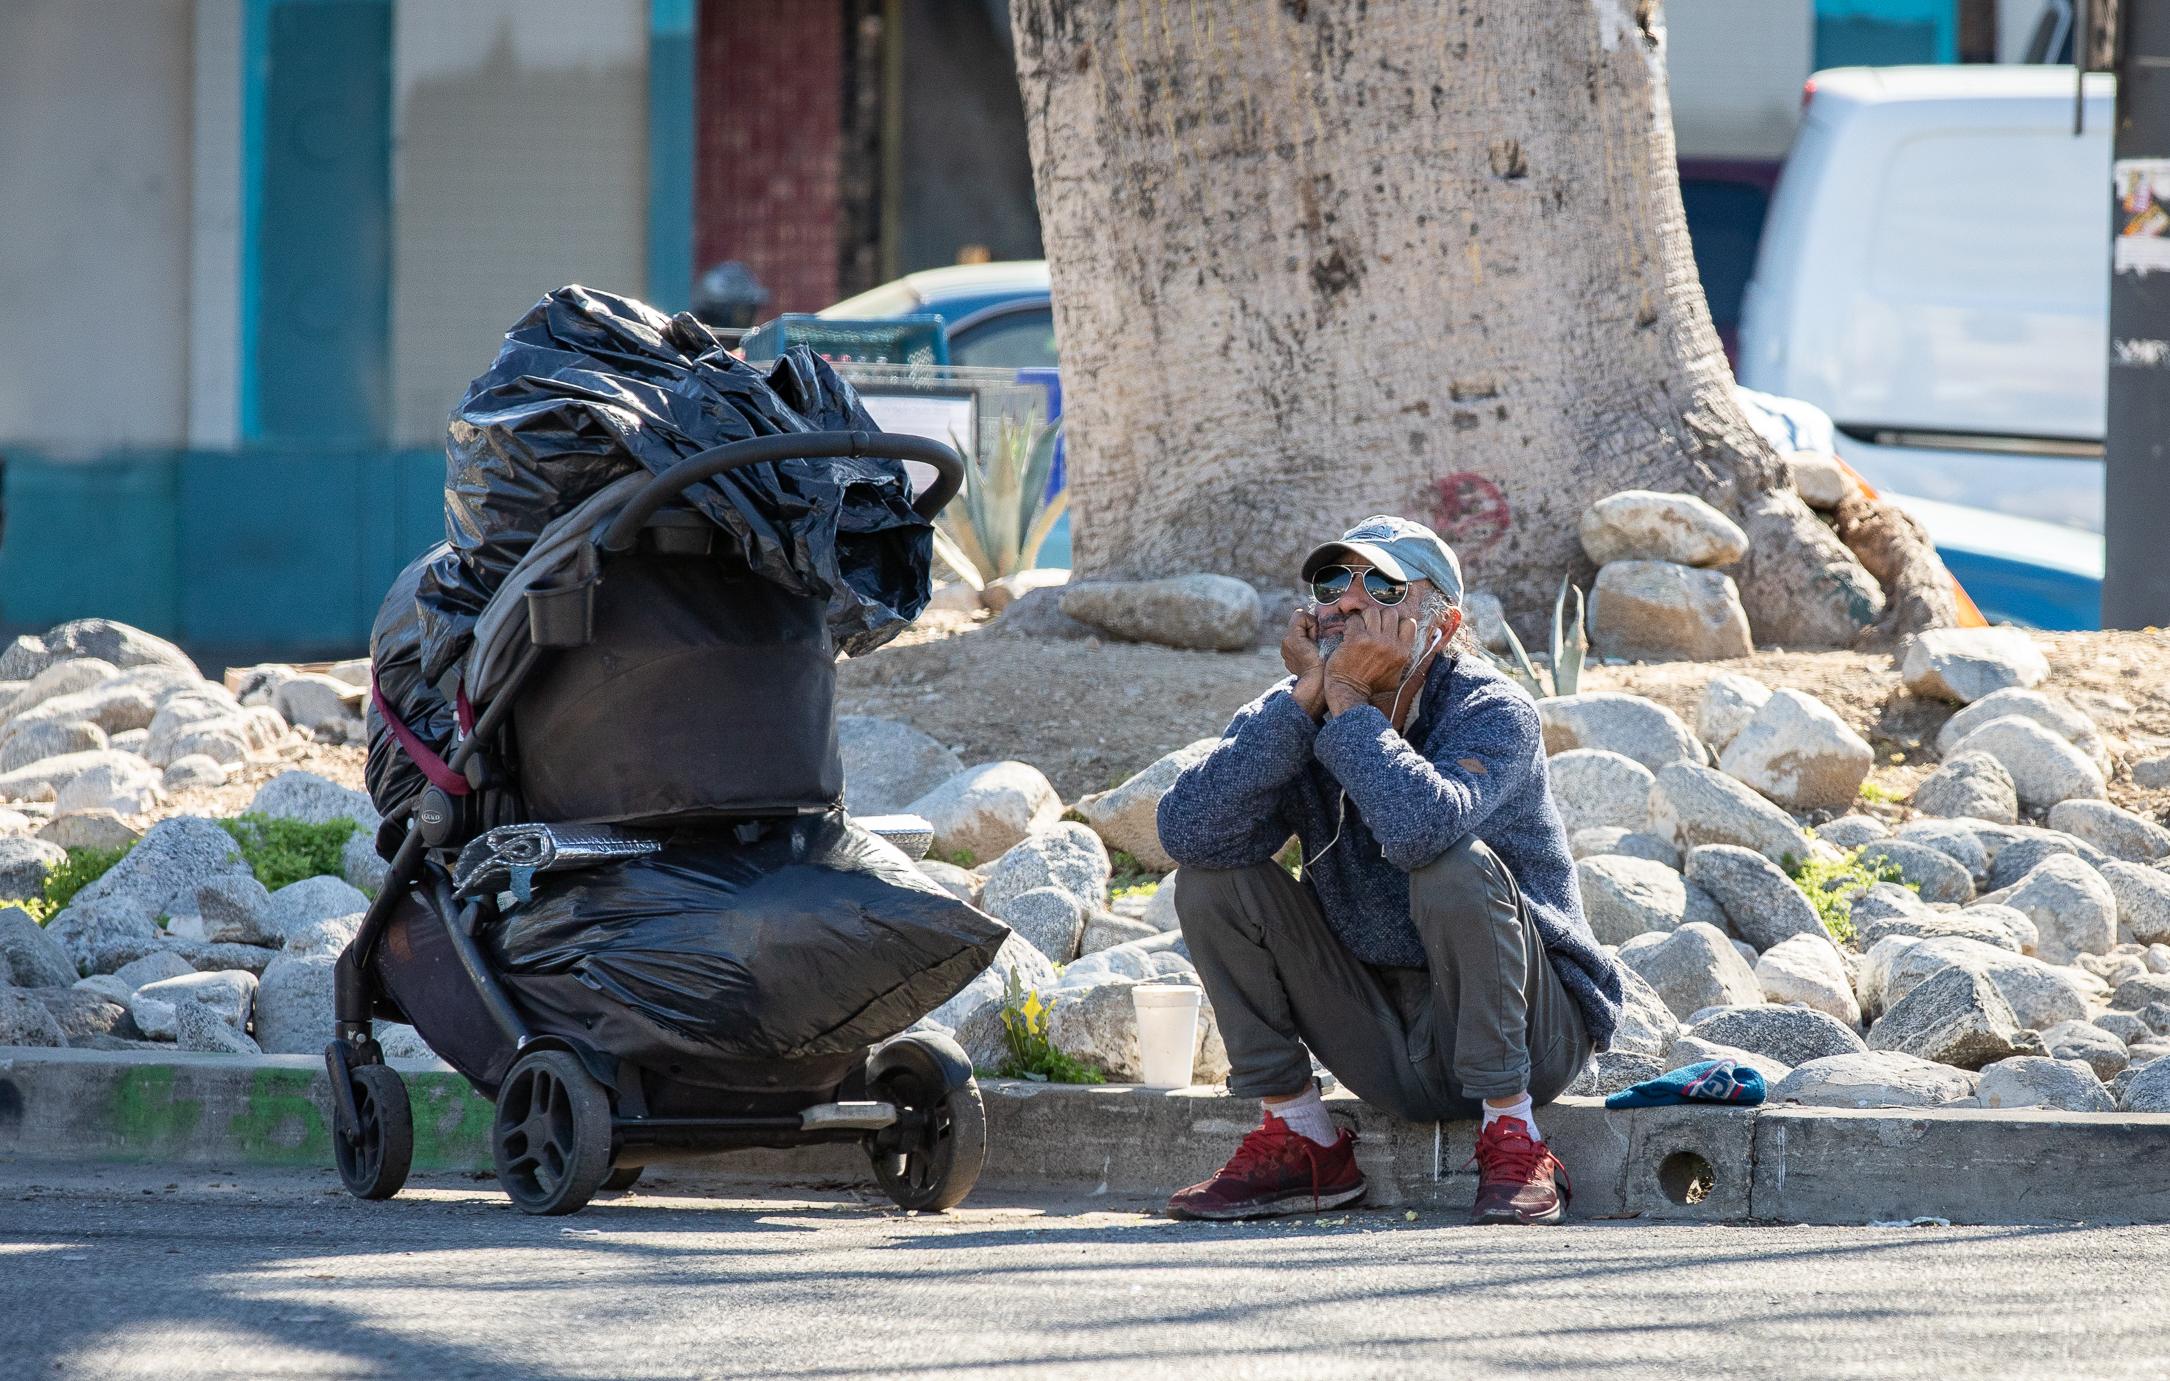 Can California Ever Reduce Homelessness?